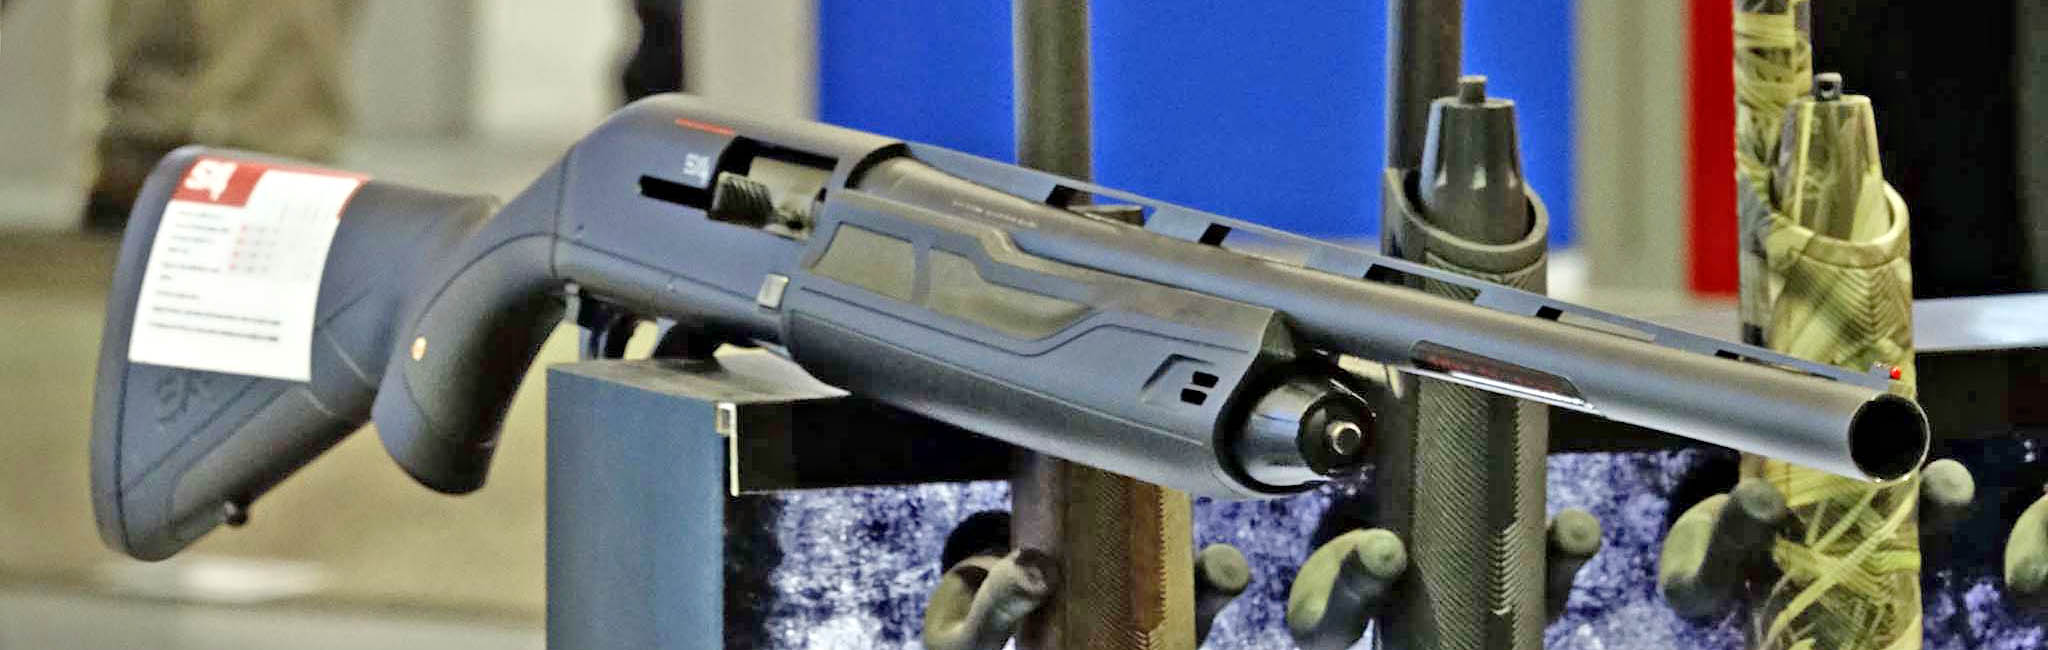 the-new-winchester-sx4-shotgun-gunsweek